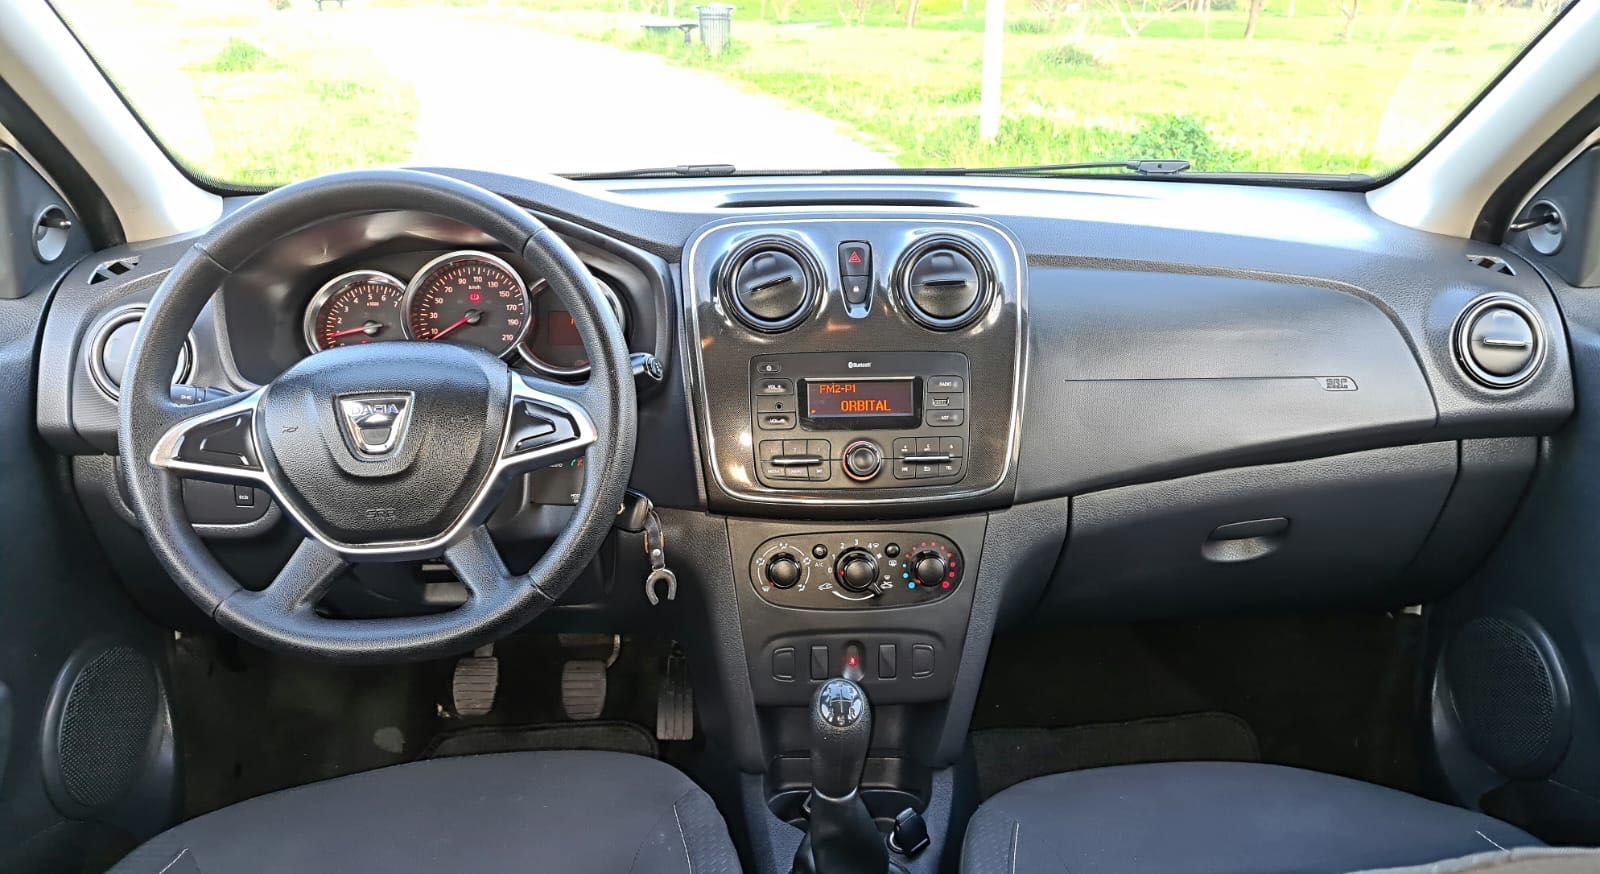 Dacia Sandero 1.5dci 90cv ano 2018 impecável